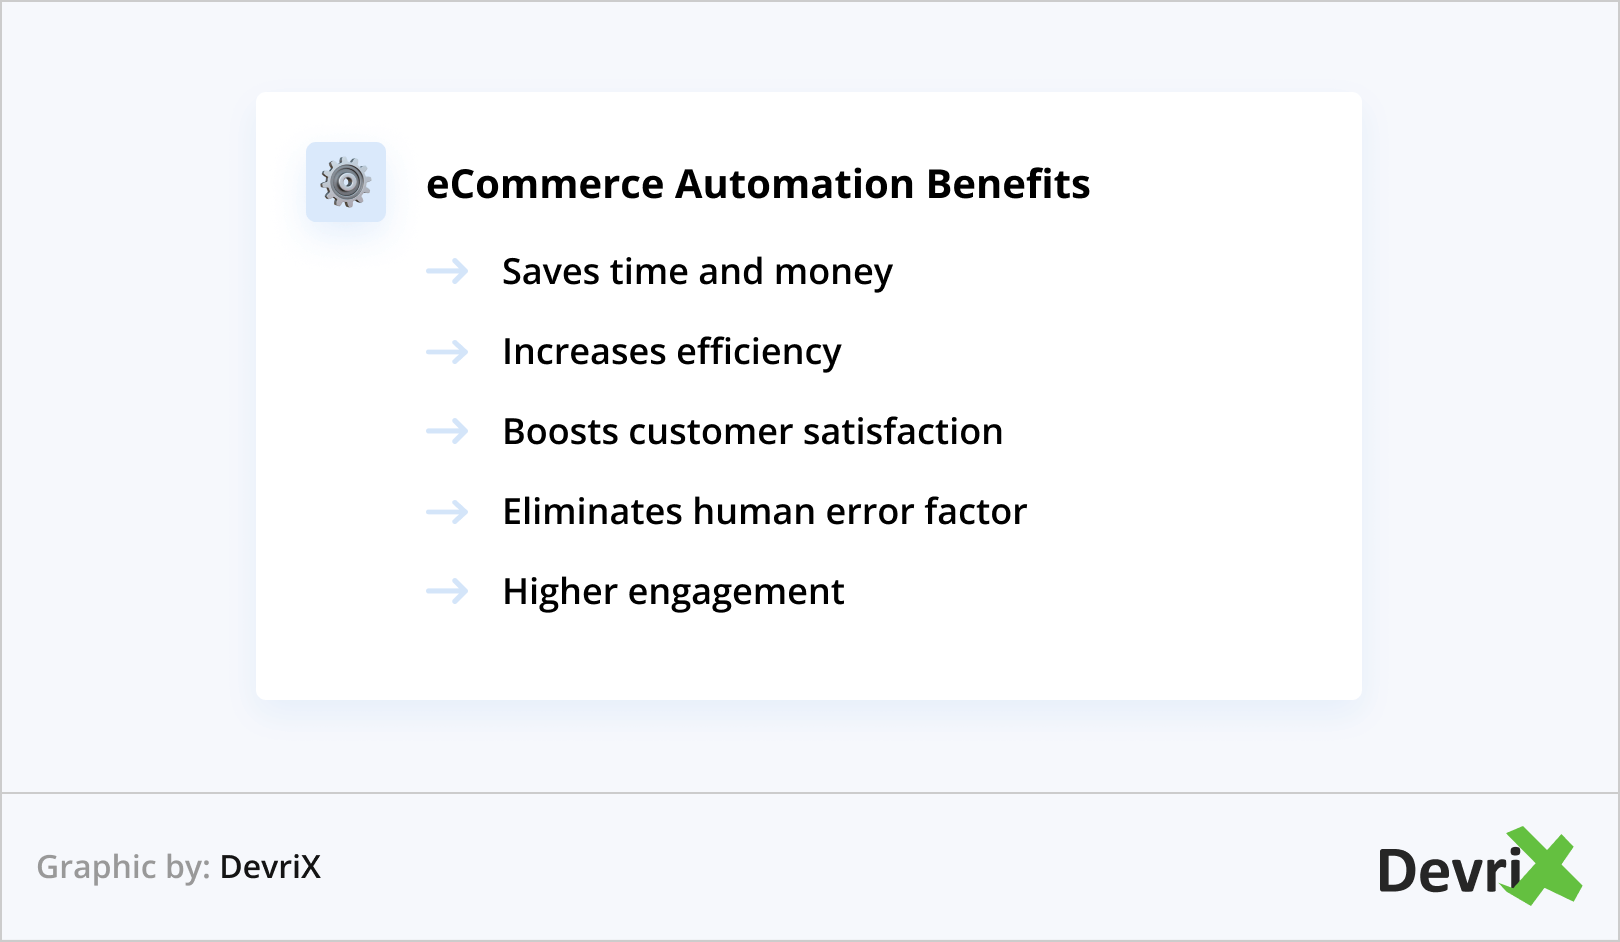 eCommerce Automation Benefits